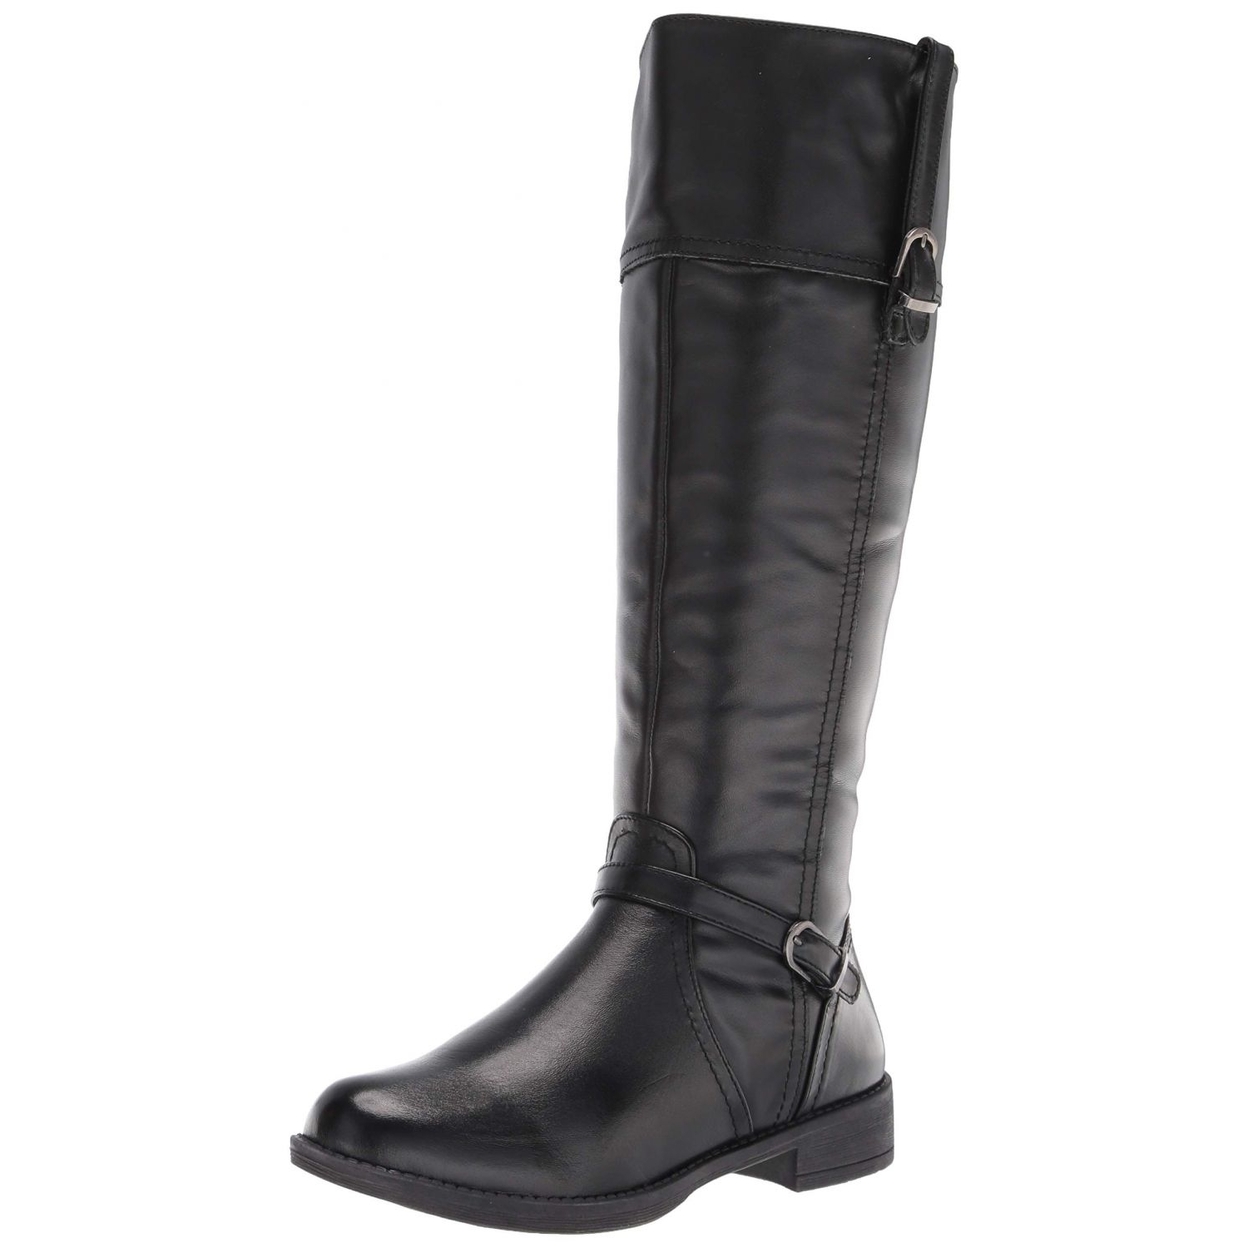 Propet Womens Tasha Zippered Casual Boots Knee High Low Heel 1-2 - Black BROWN - BROWN, 6 X-Wide